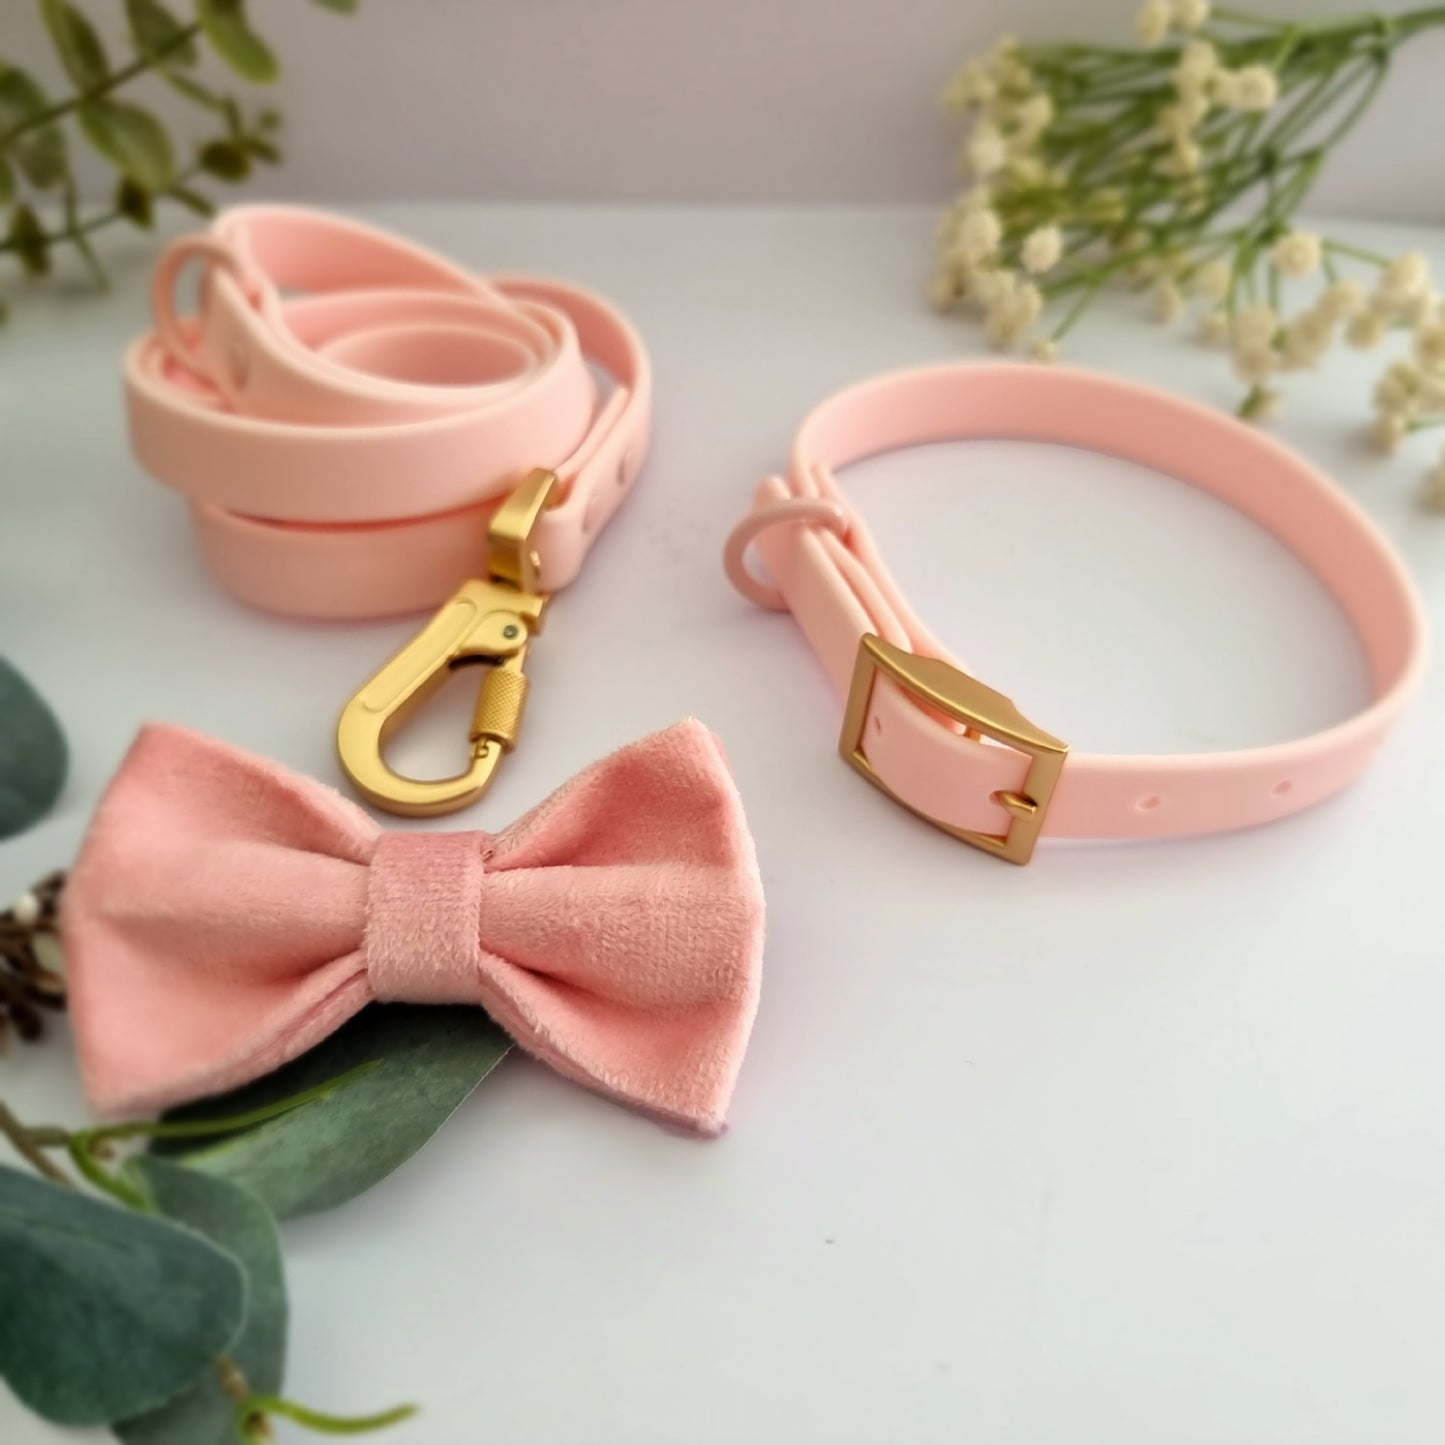 Waterproof pink dog collar - PVC